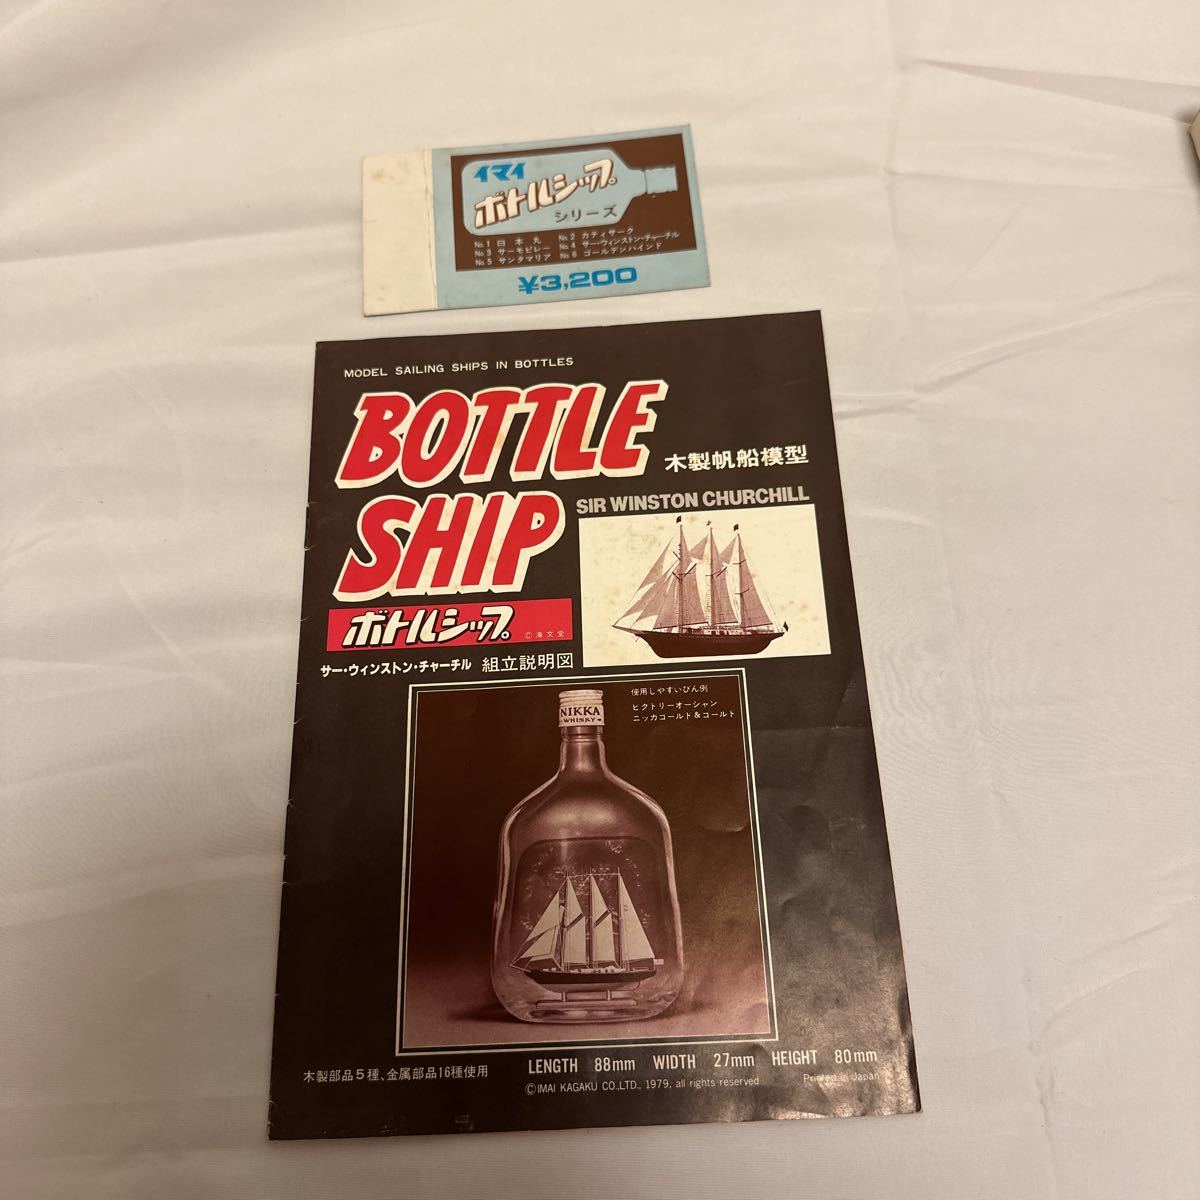 IMAI bottle sipBOTTLE SHIP 1/500 wooden sailing boat model sa-* Winston * Churchill SIR WINSTON CHURCHILL